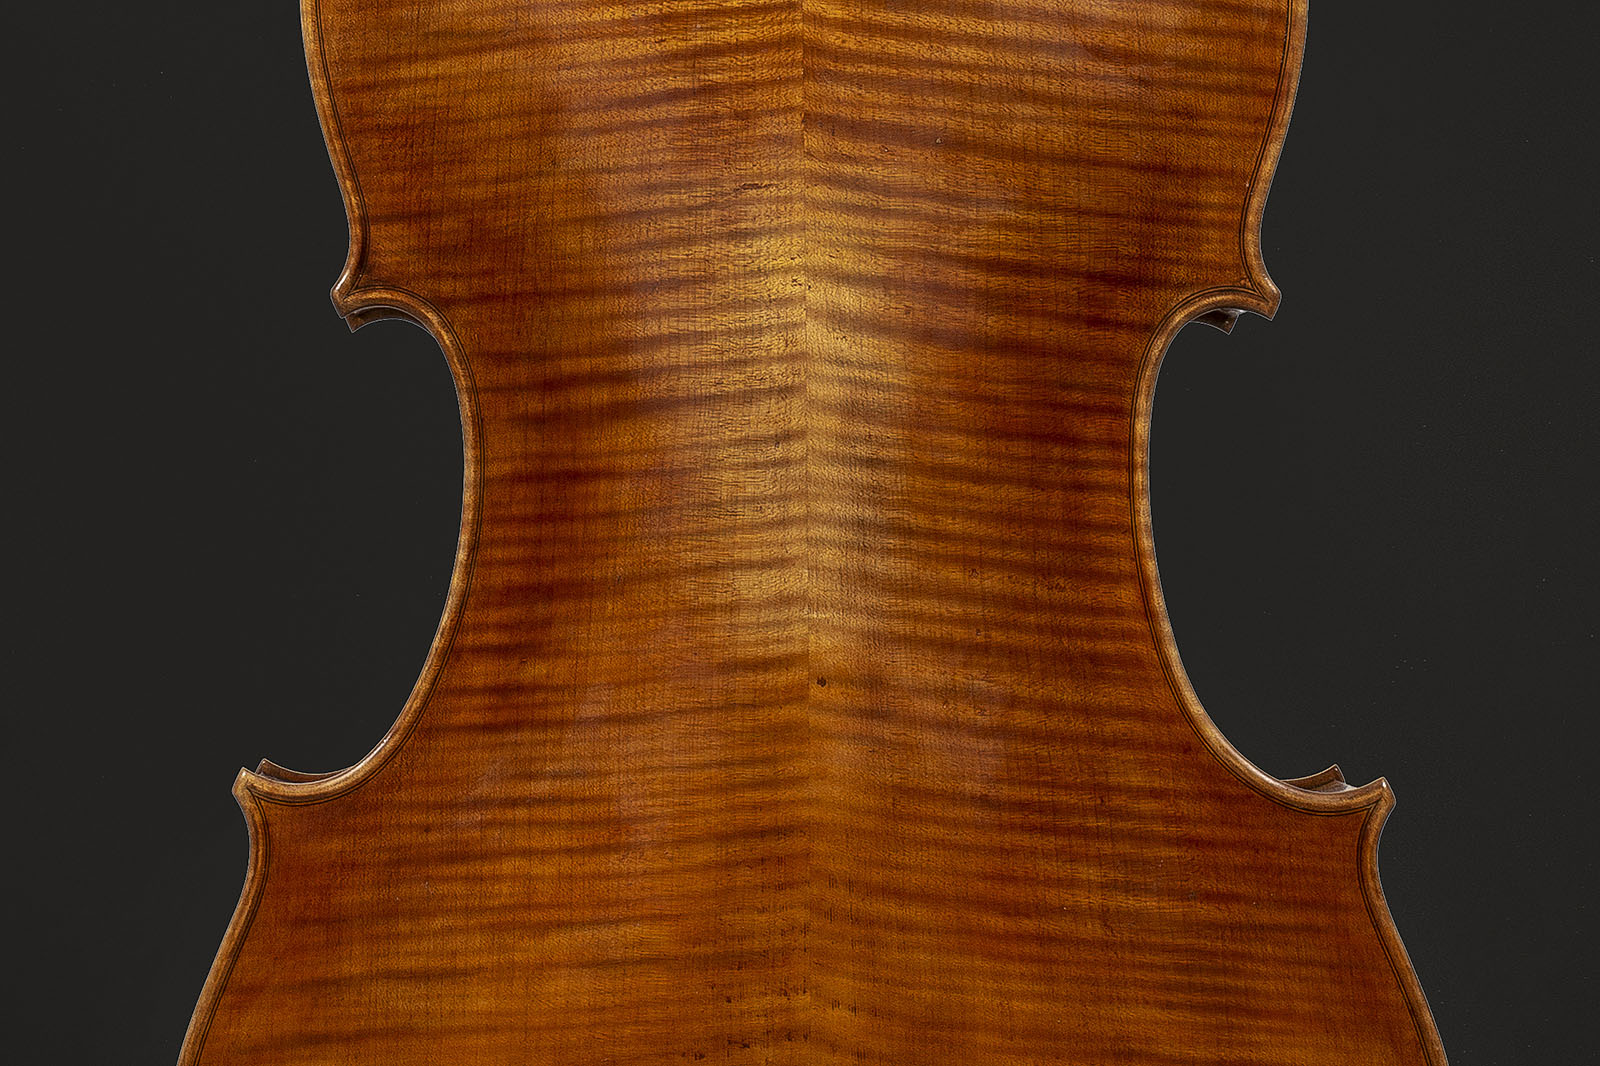 Antonio Stradivari Cremona 1700 “Cristiani“ “Aeos“ - Image 3